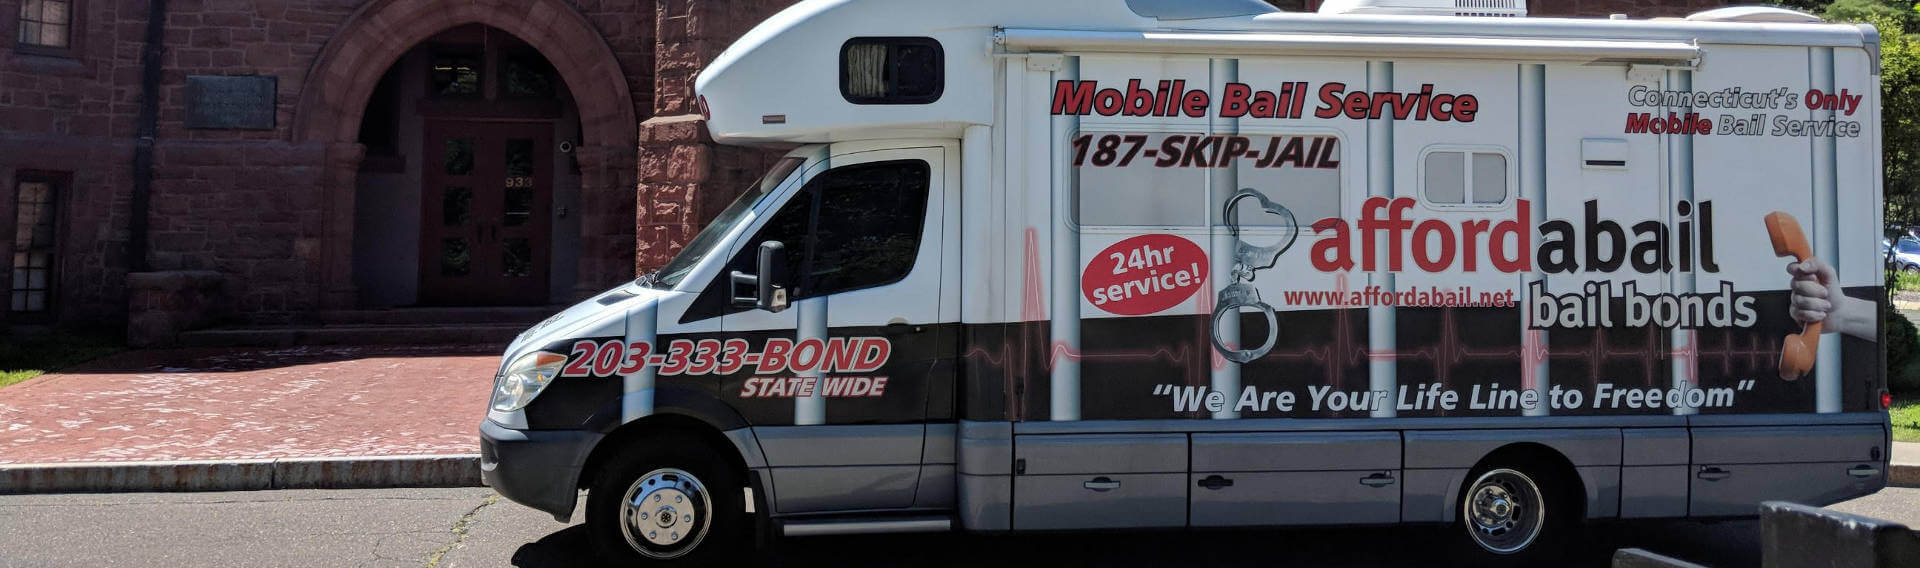 Mobile bail bonds service in Fairfield CT